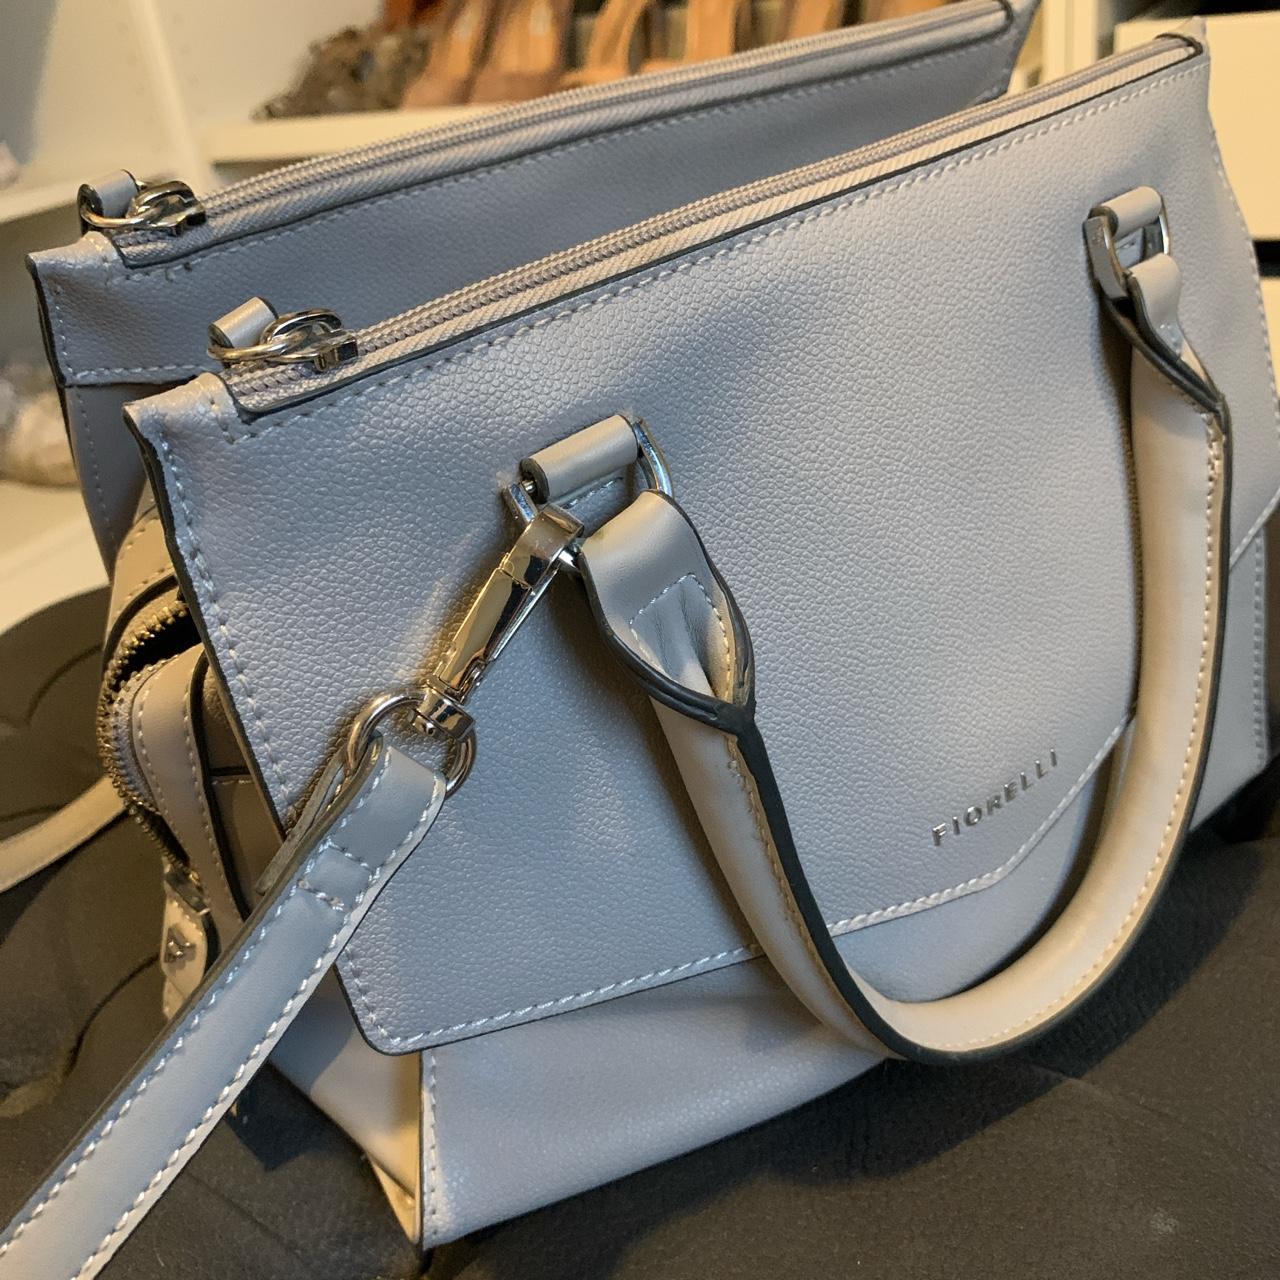 Grey, leather ‘Fiorelli’ bag. Medium sized, perfect... - Depop